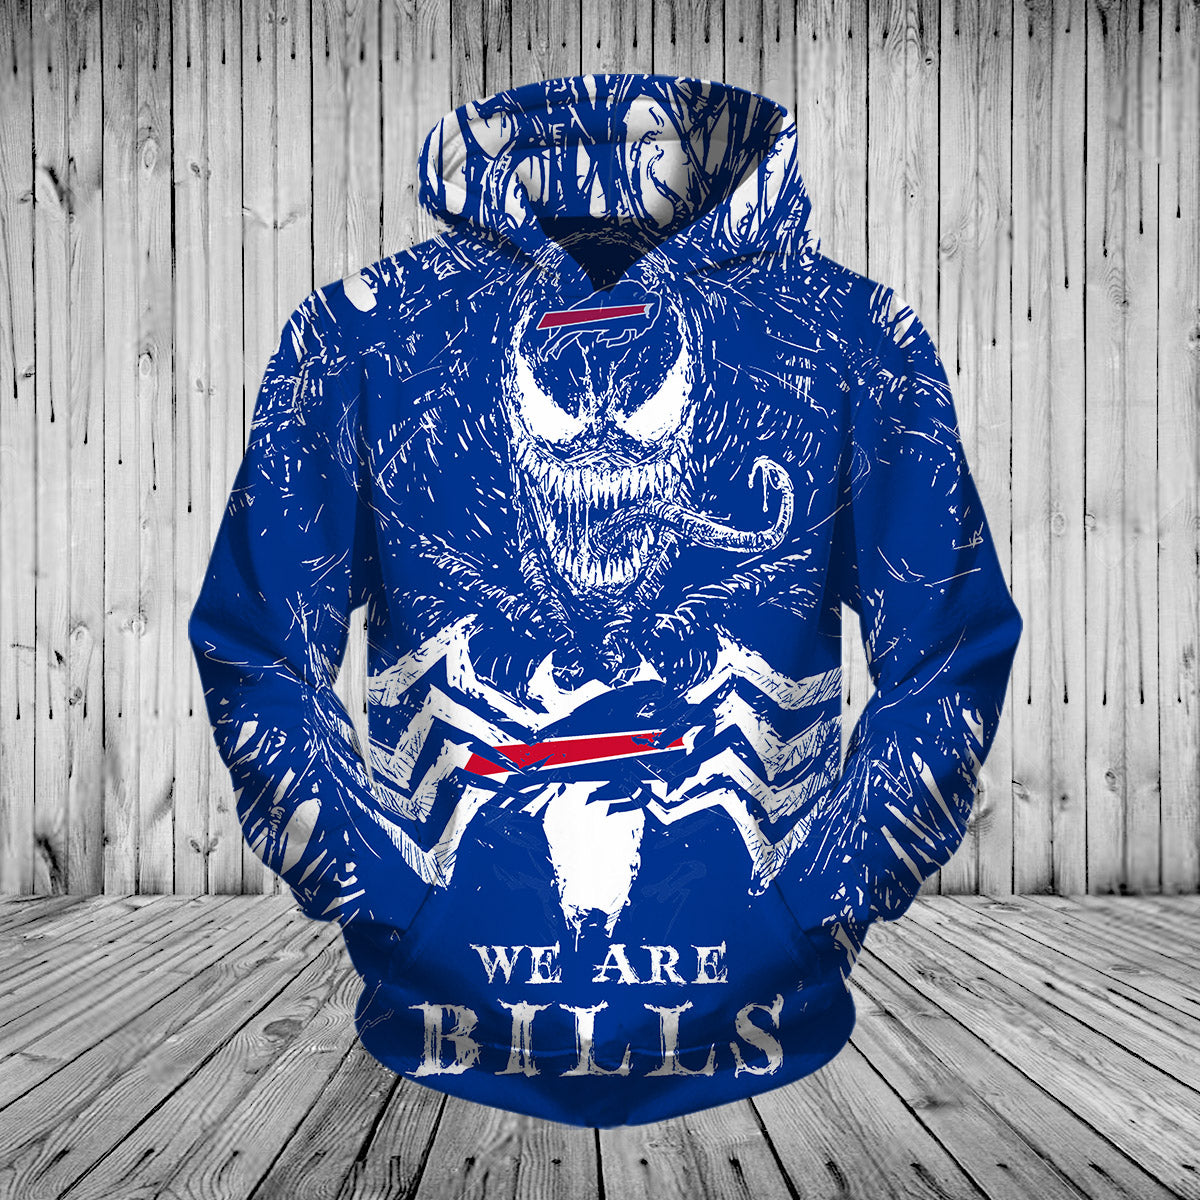 cheap buffalo bills hoodies